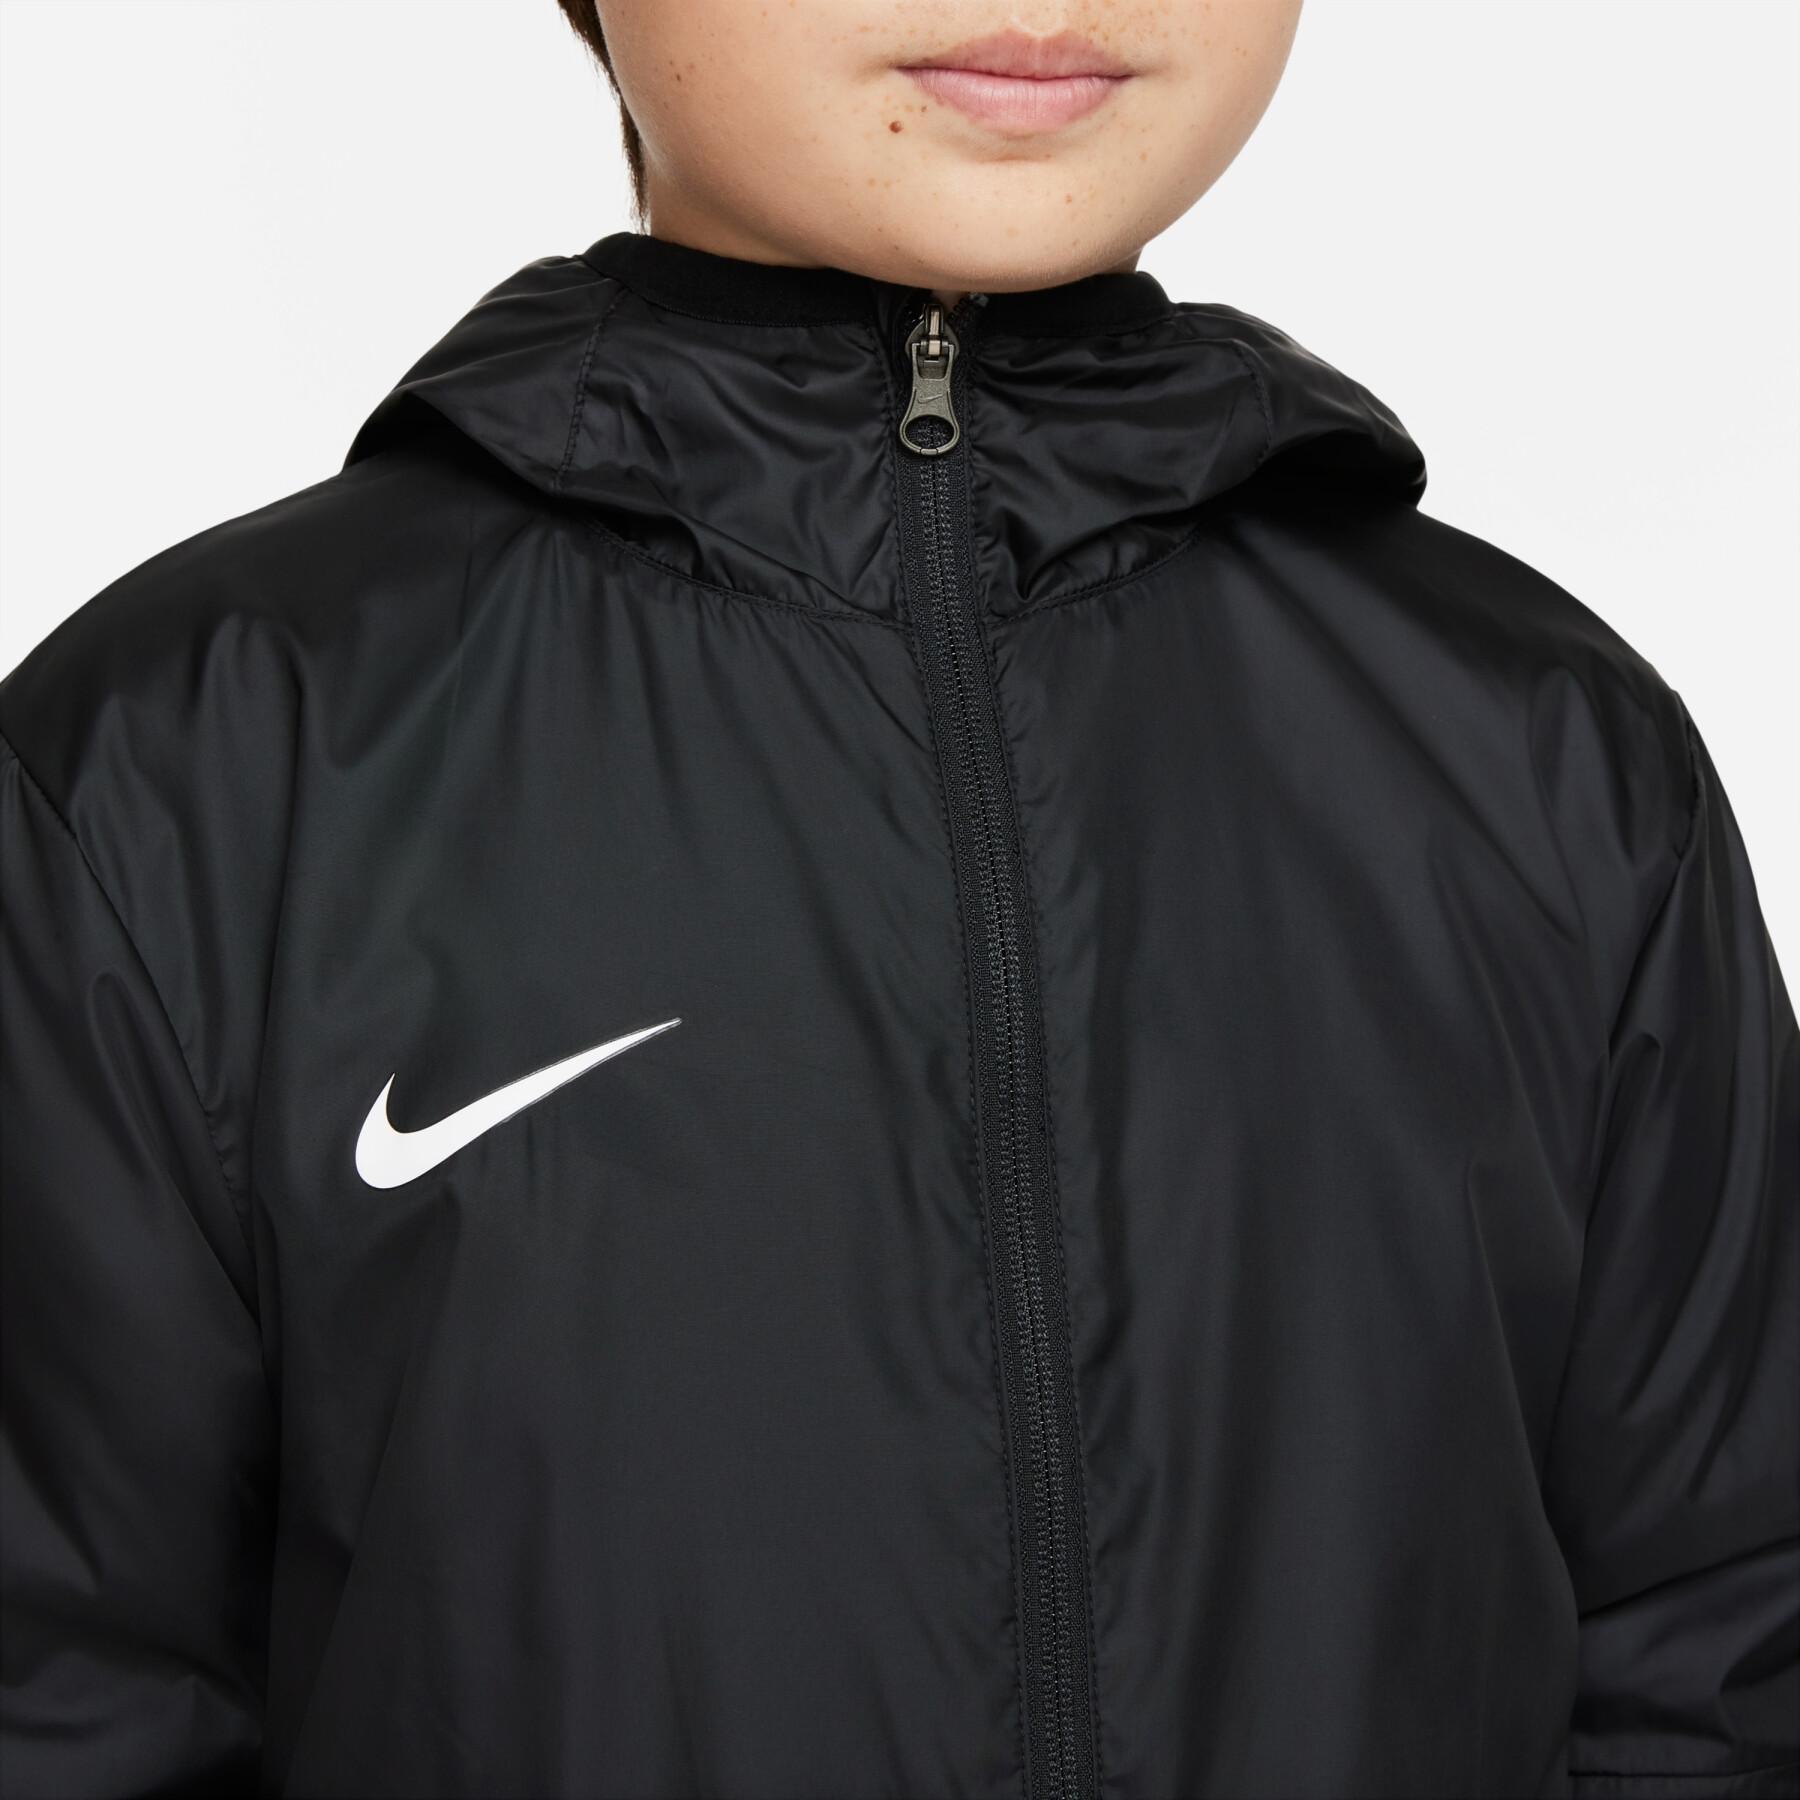 Veste enfant Nike Repel Park20 - Nike - Hauts d'entraînement - Enfants